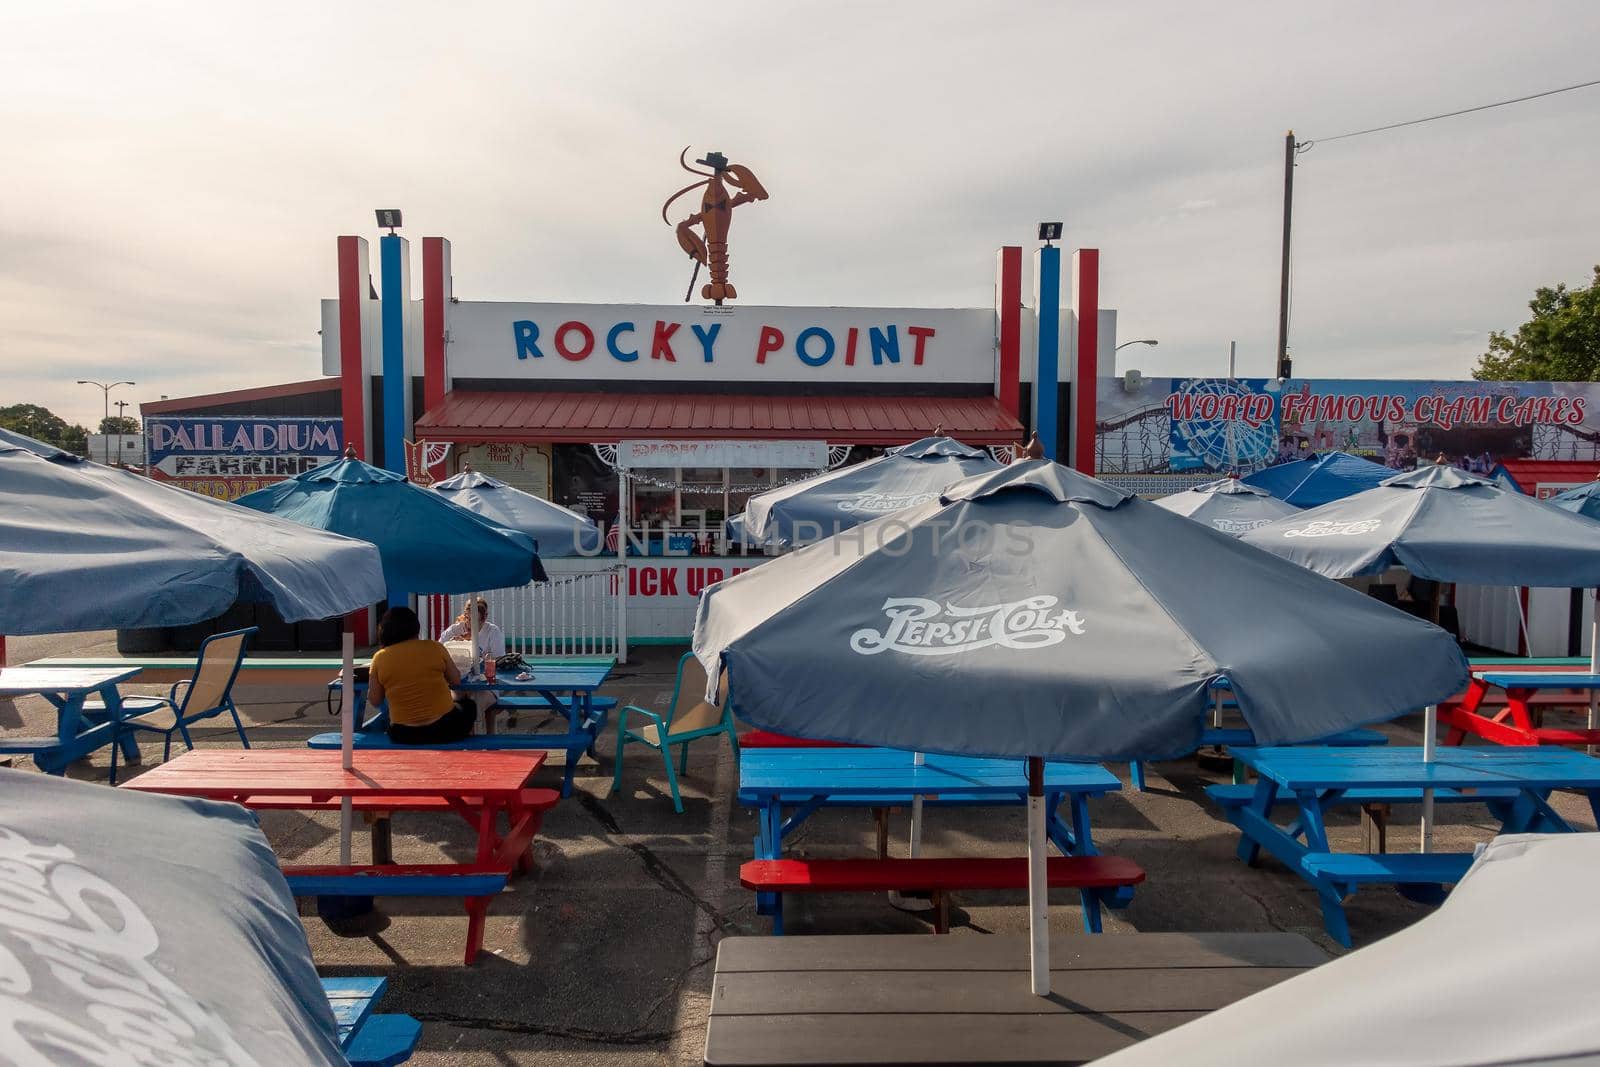 rocky point food stop in warwick rhode island by digidreamgrafix